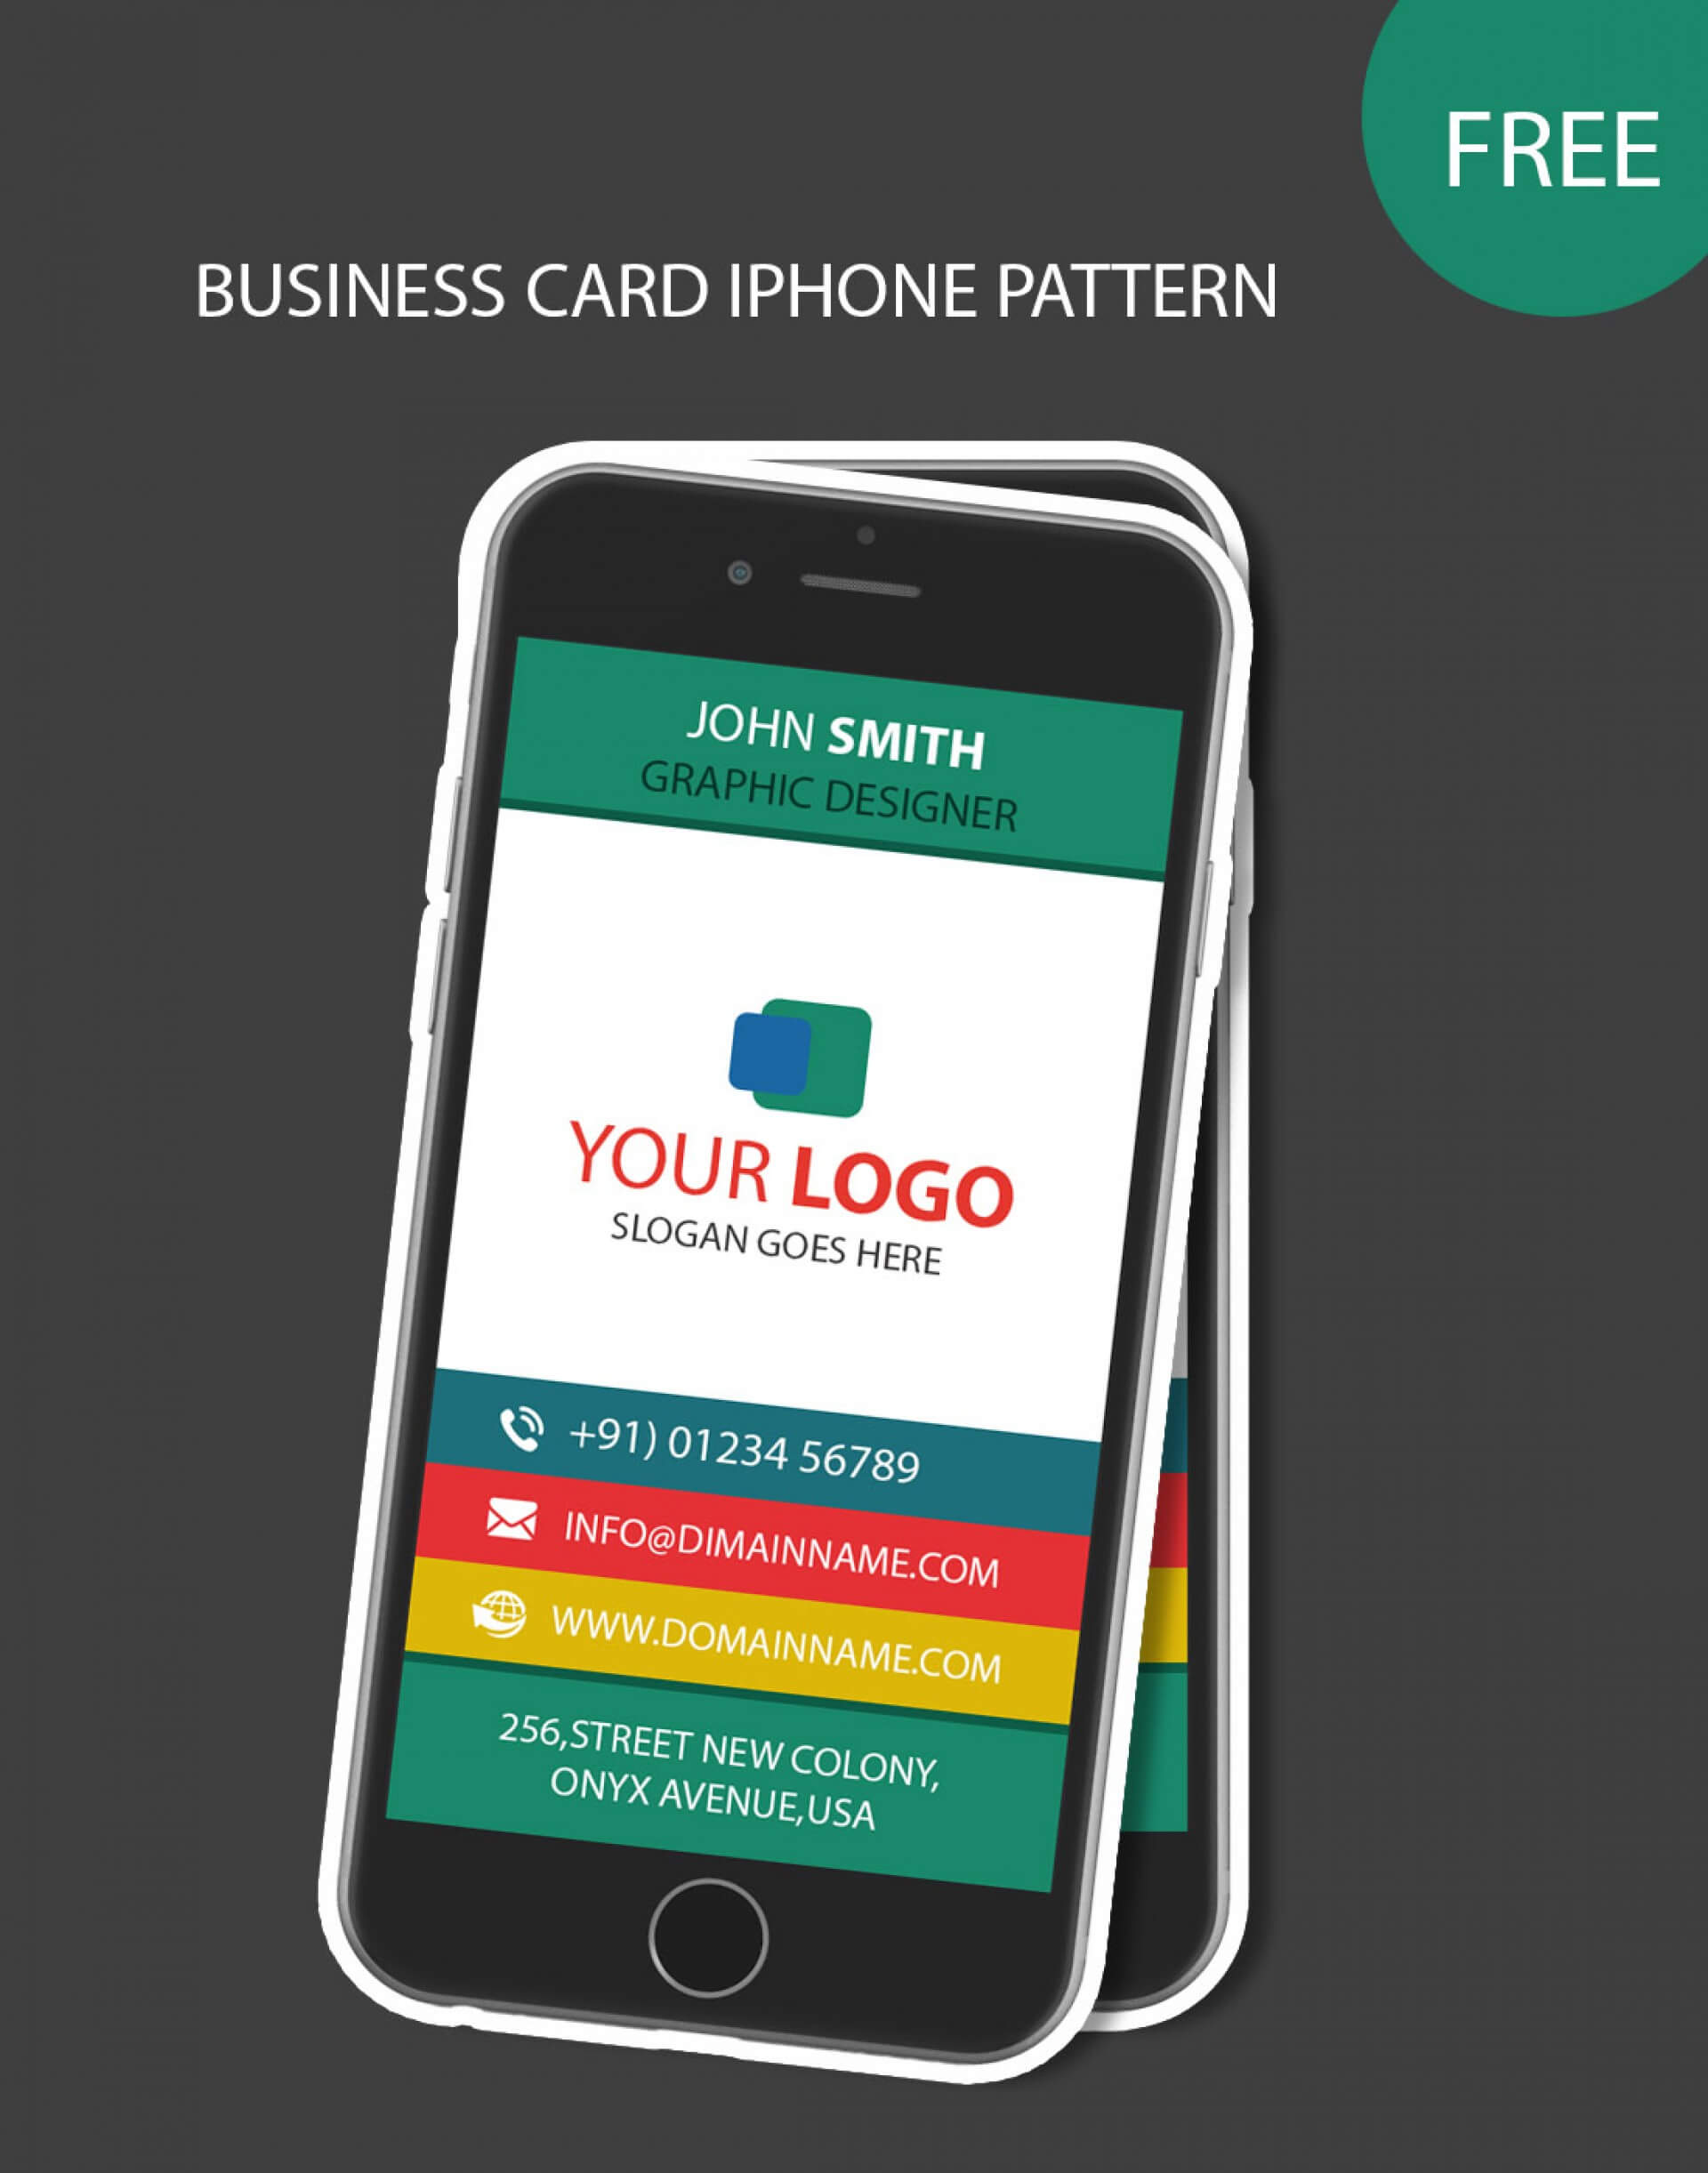 Unusual Iphone Business Card Template Ideas Psd Free For Iphone Business Card Template